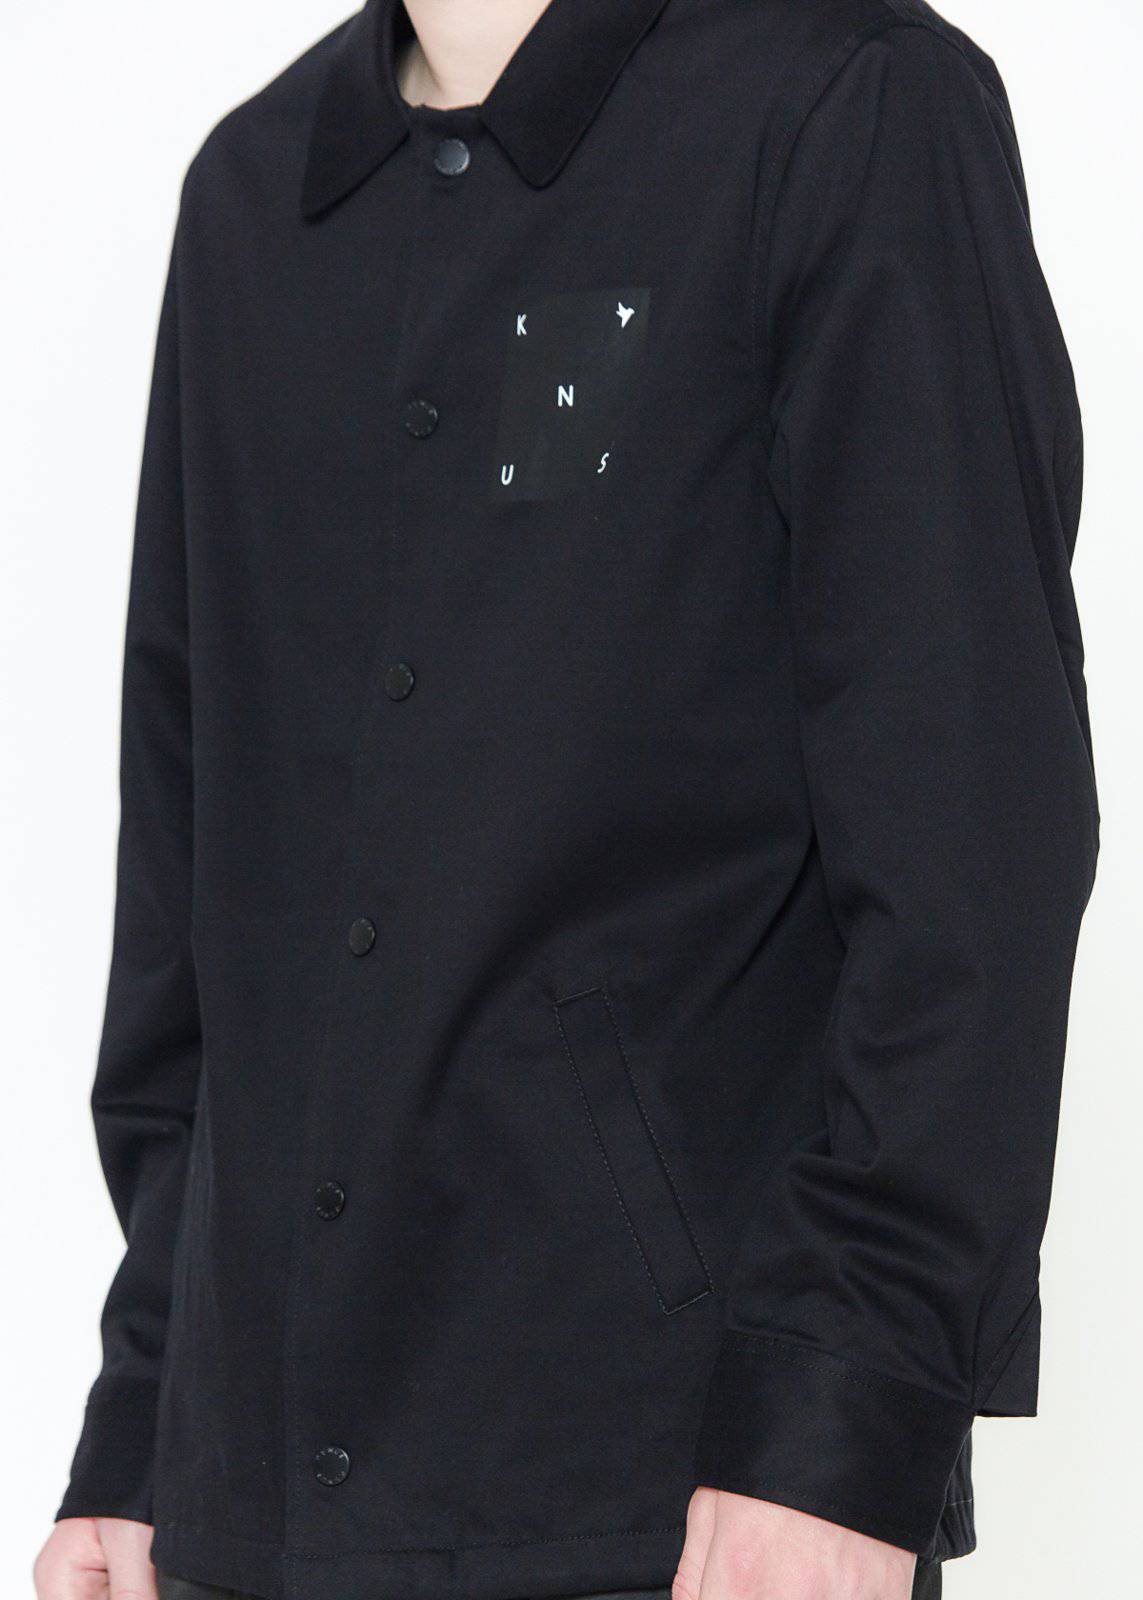 Konus Men's Coaches Jacket in Custom Camo Fabric in Black by Shop at Konus